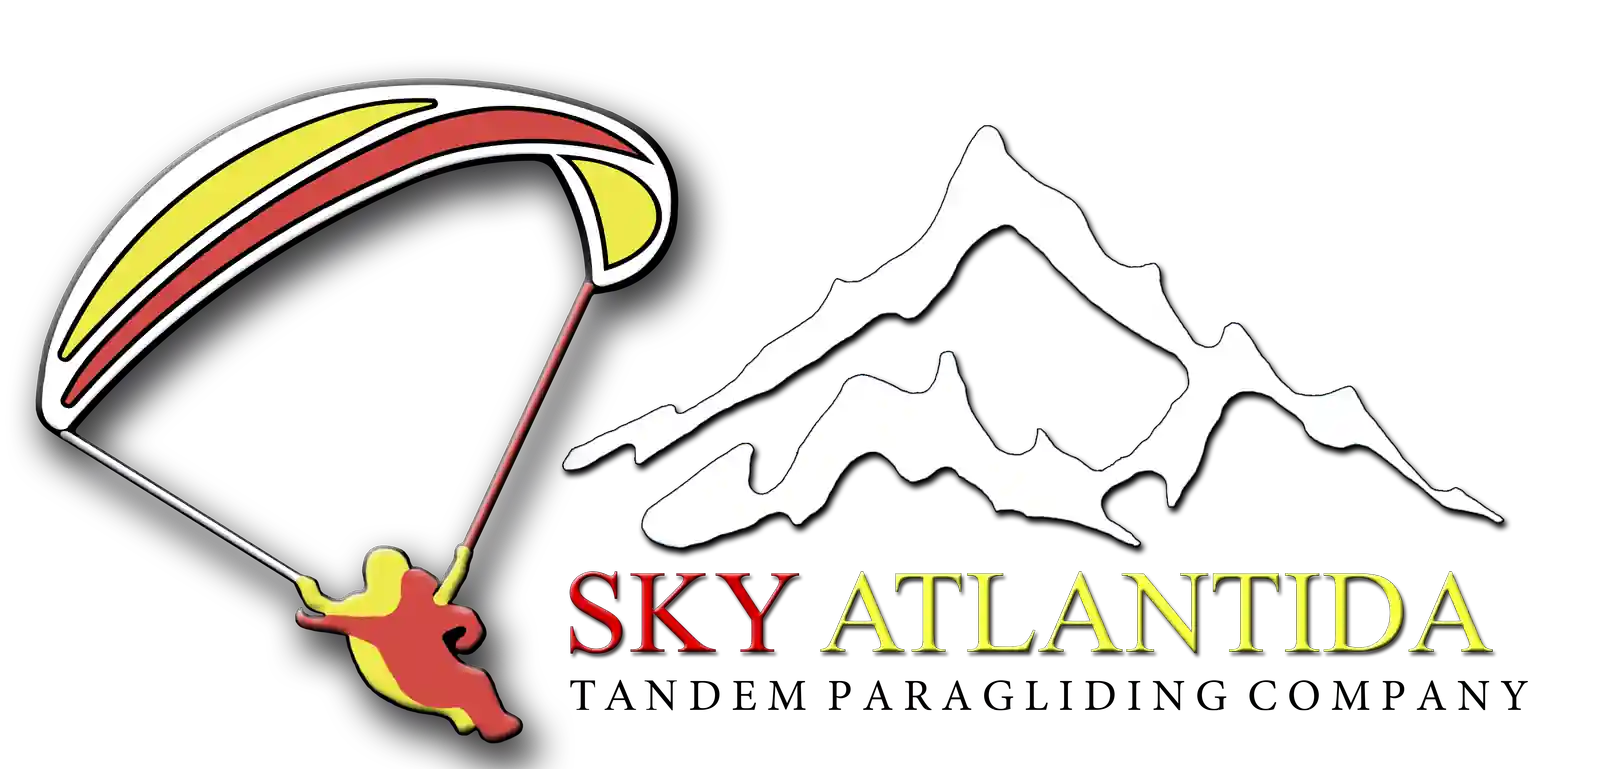 skyatlantida paragliding company logo